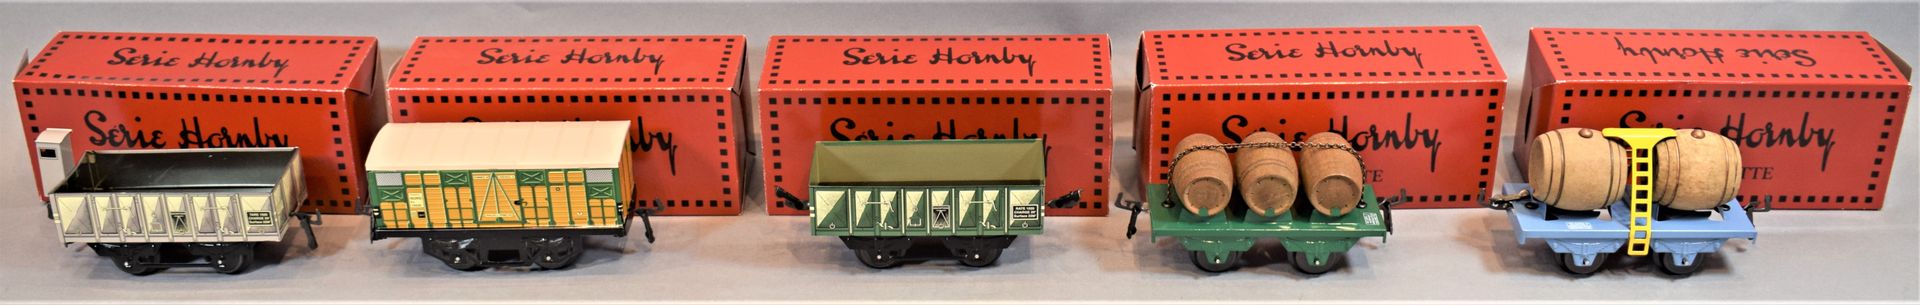 Null HACHETTE HORNBY系列

五辆货运车，"O "比例。



- 灰色缆车车厢

- 双层闪电马车

- 三辆闪电式马车

- 绿色吊厢车
&hellip;